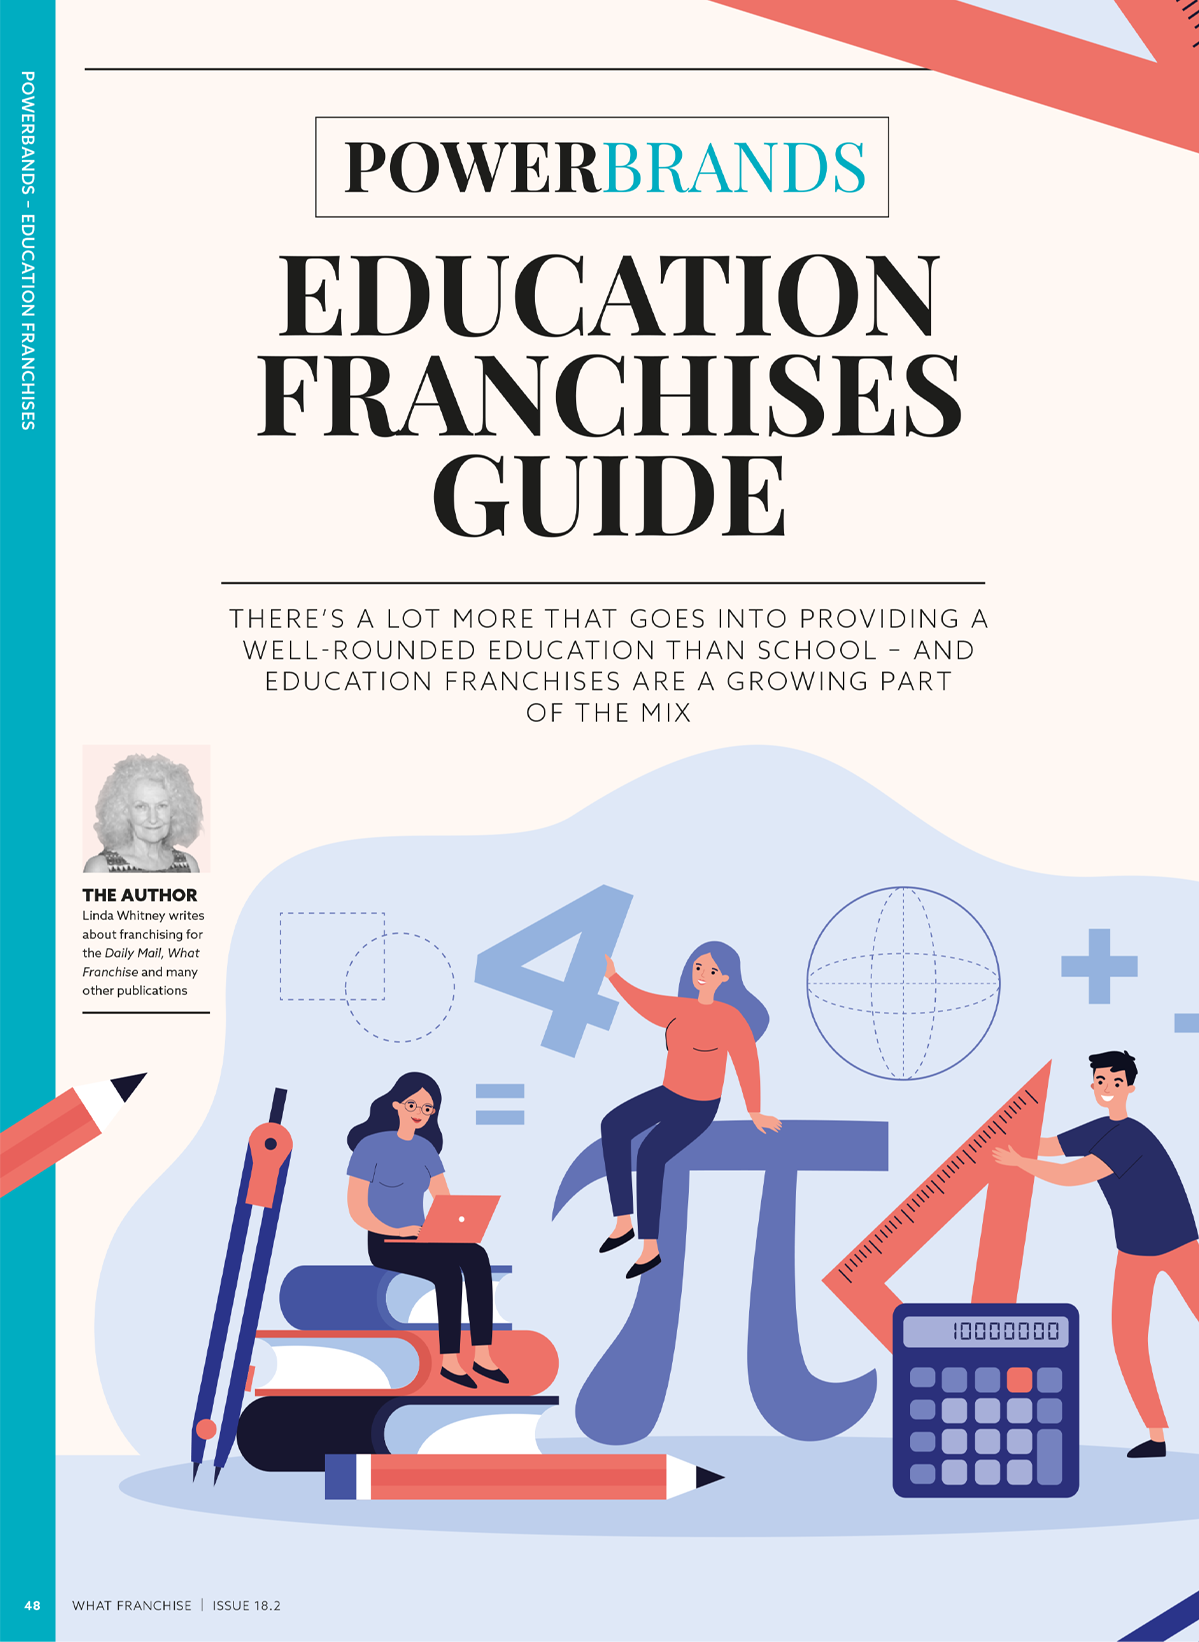 Powerbrands: Education Franchises Guide